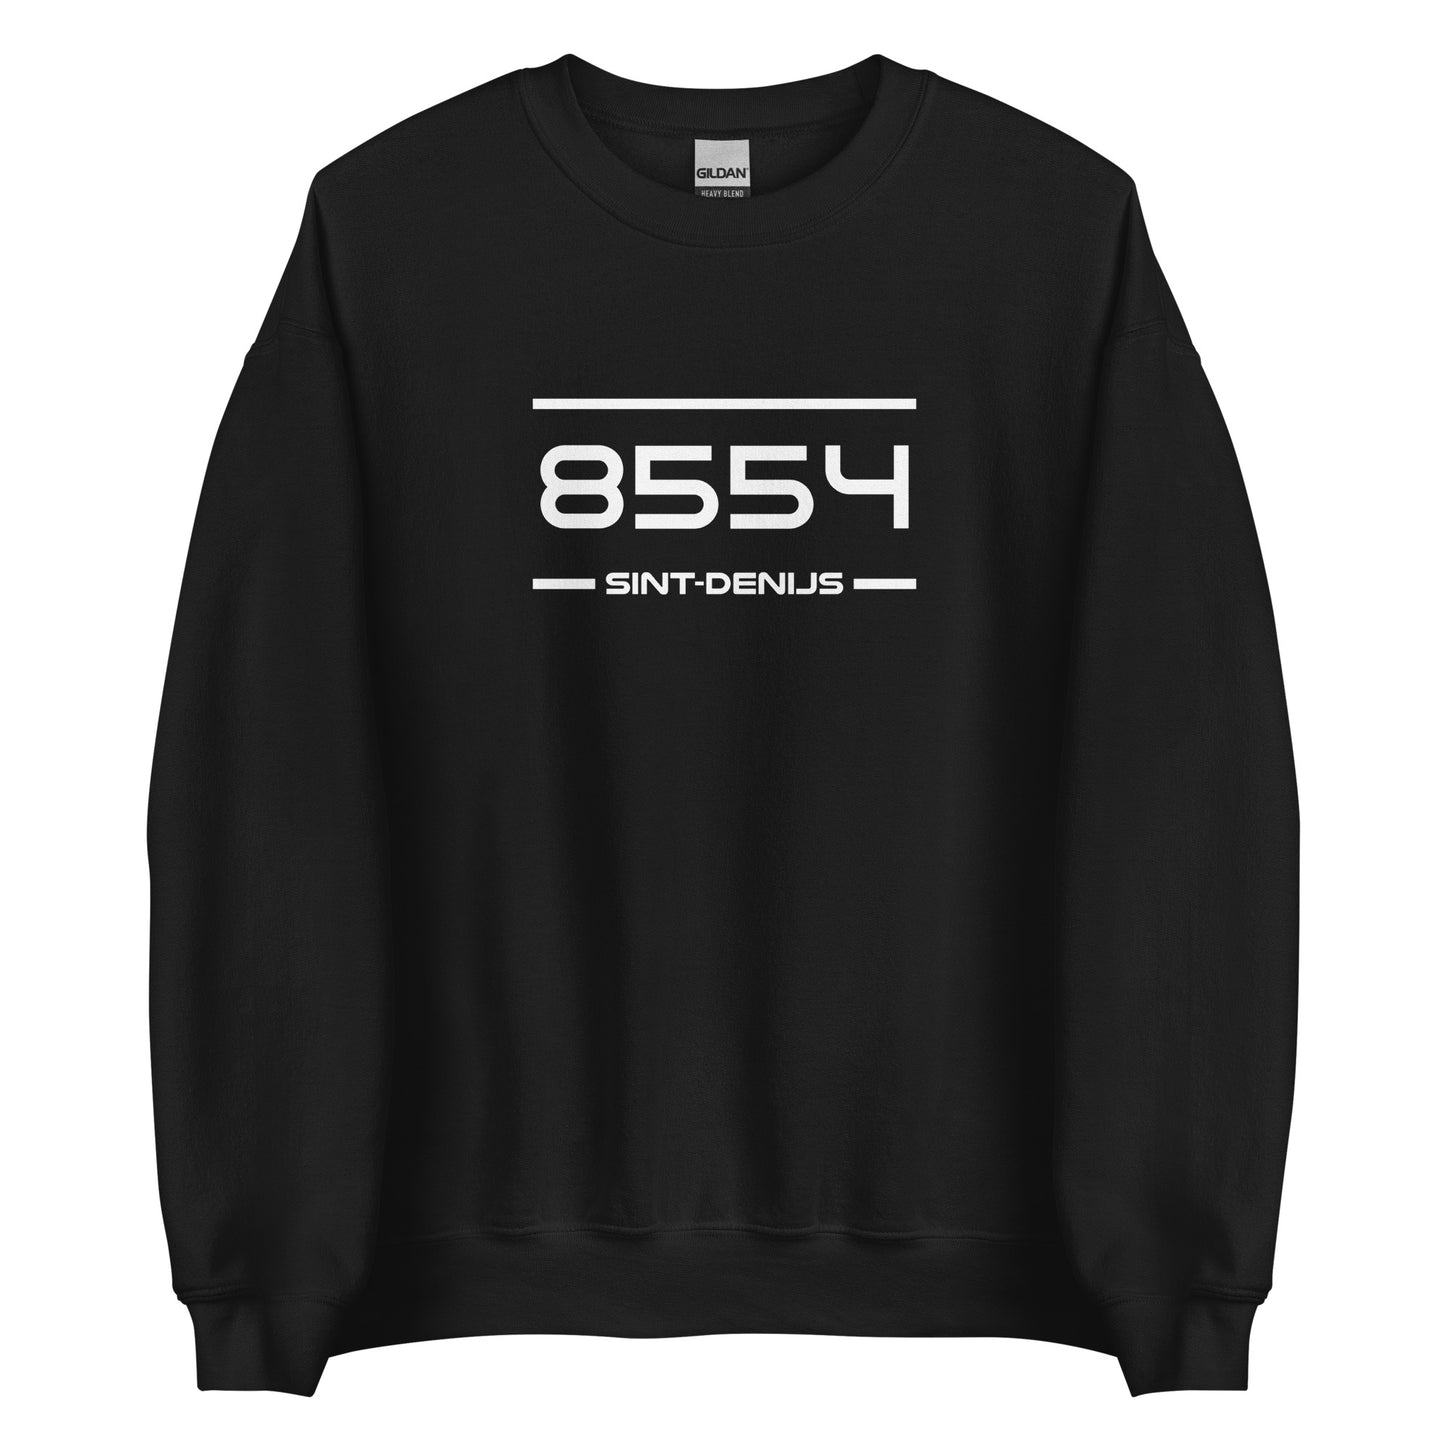 Sweater - 8554 - Sint-Denijs (M/V)